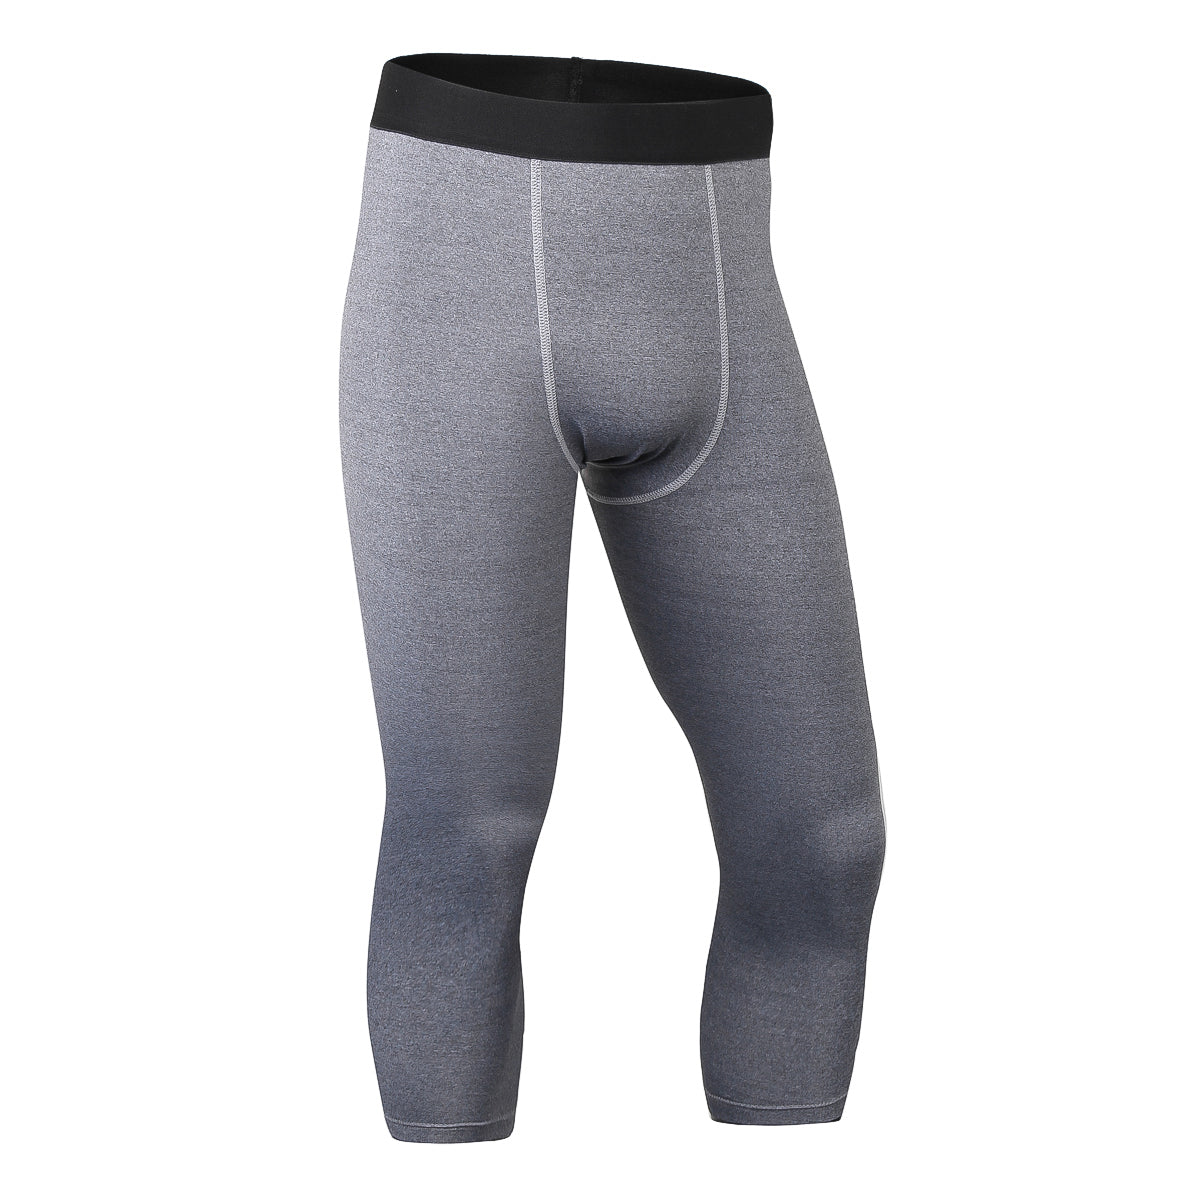 Mens 3/4 Compression Leggings Capri Running Tights Football Pants Yoga Gym Baselayer for Workout Training LANBAOSI